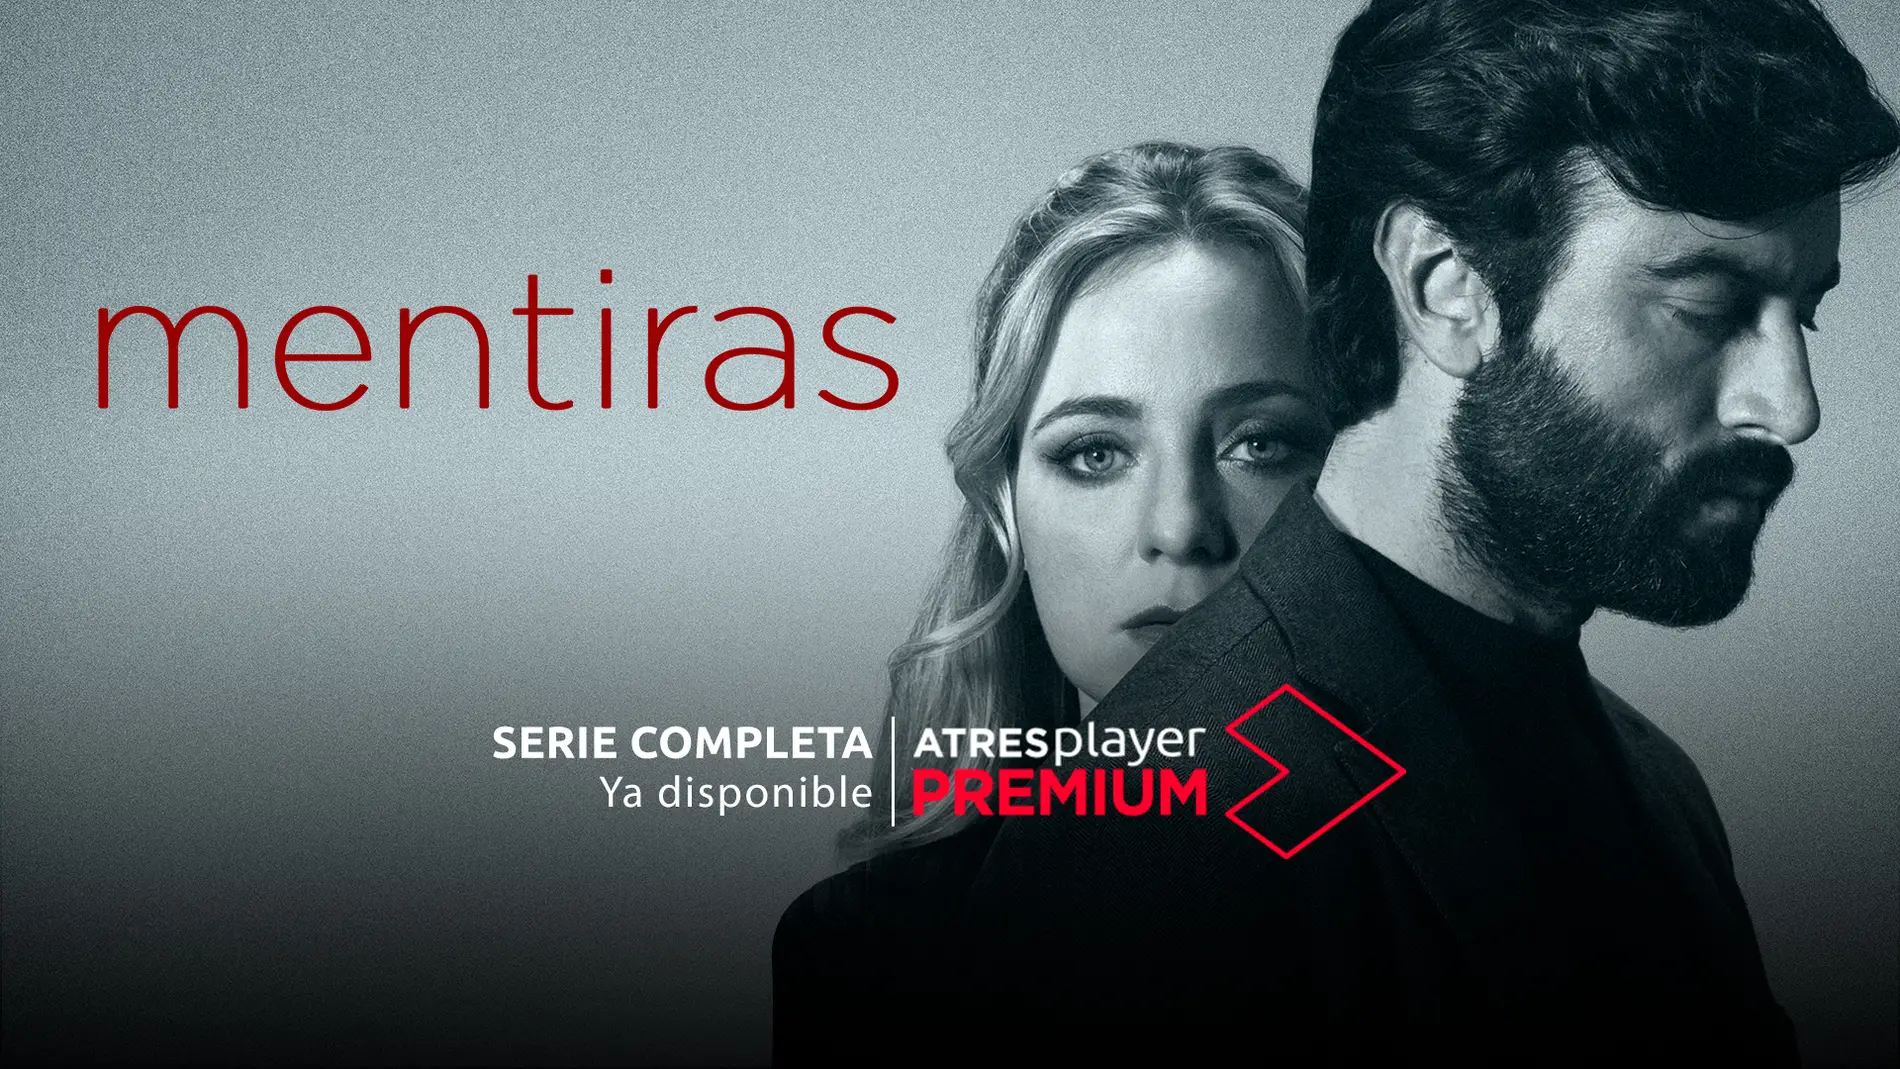 Mentiras (Temporada) - Serie completa